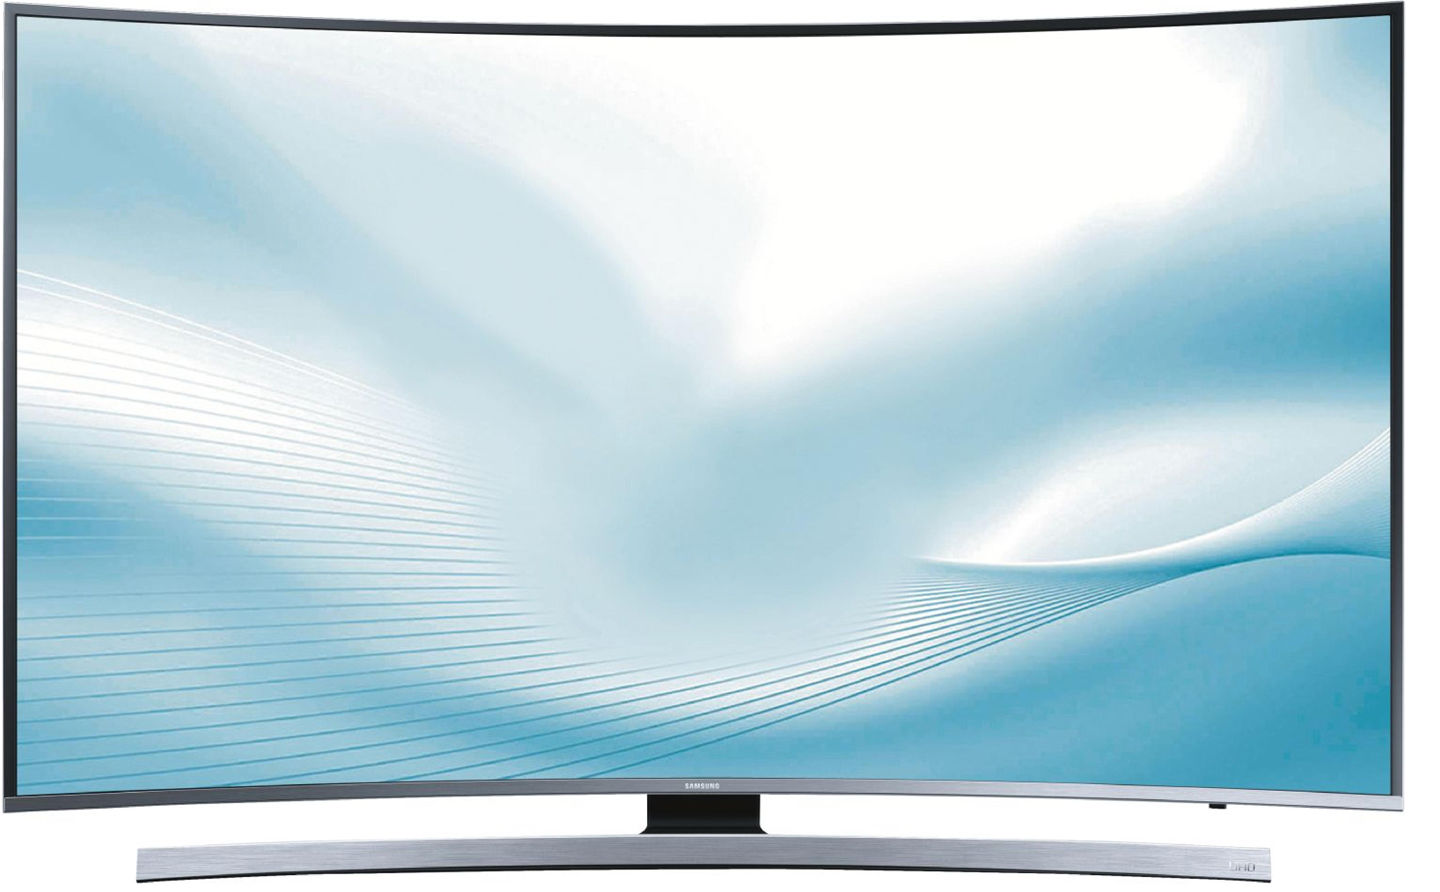 Bild zu 55 Zoll UHD 4K Curved LED-Fernseher Samsunf UE55KU6649 für 777€